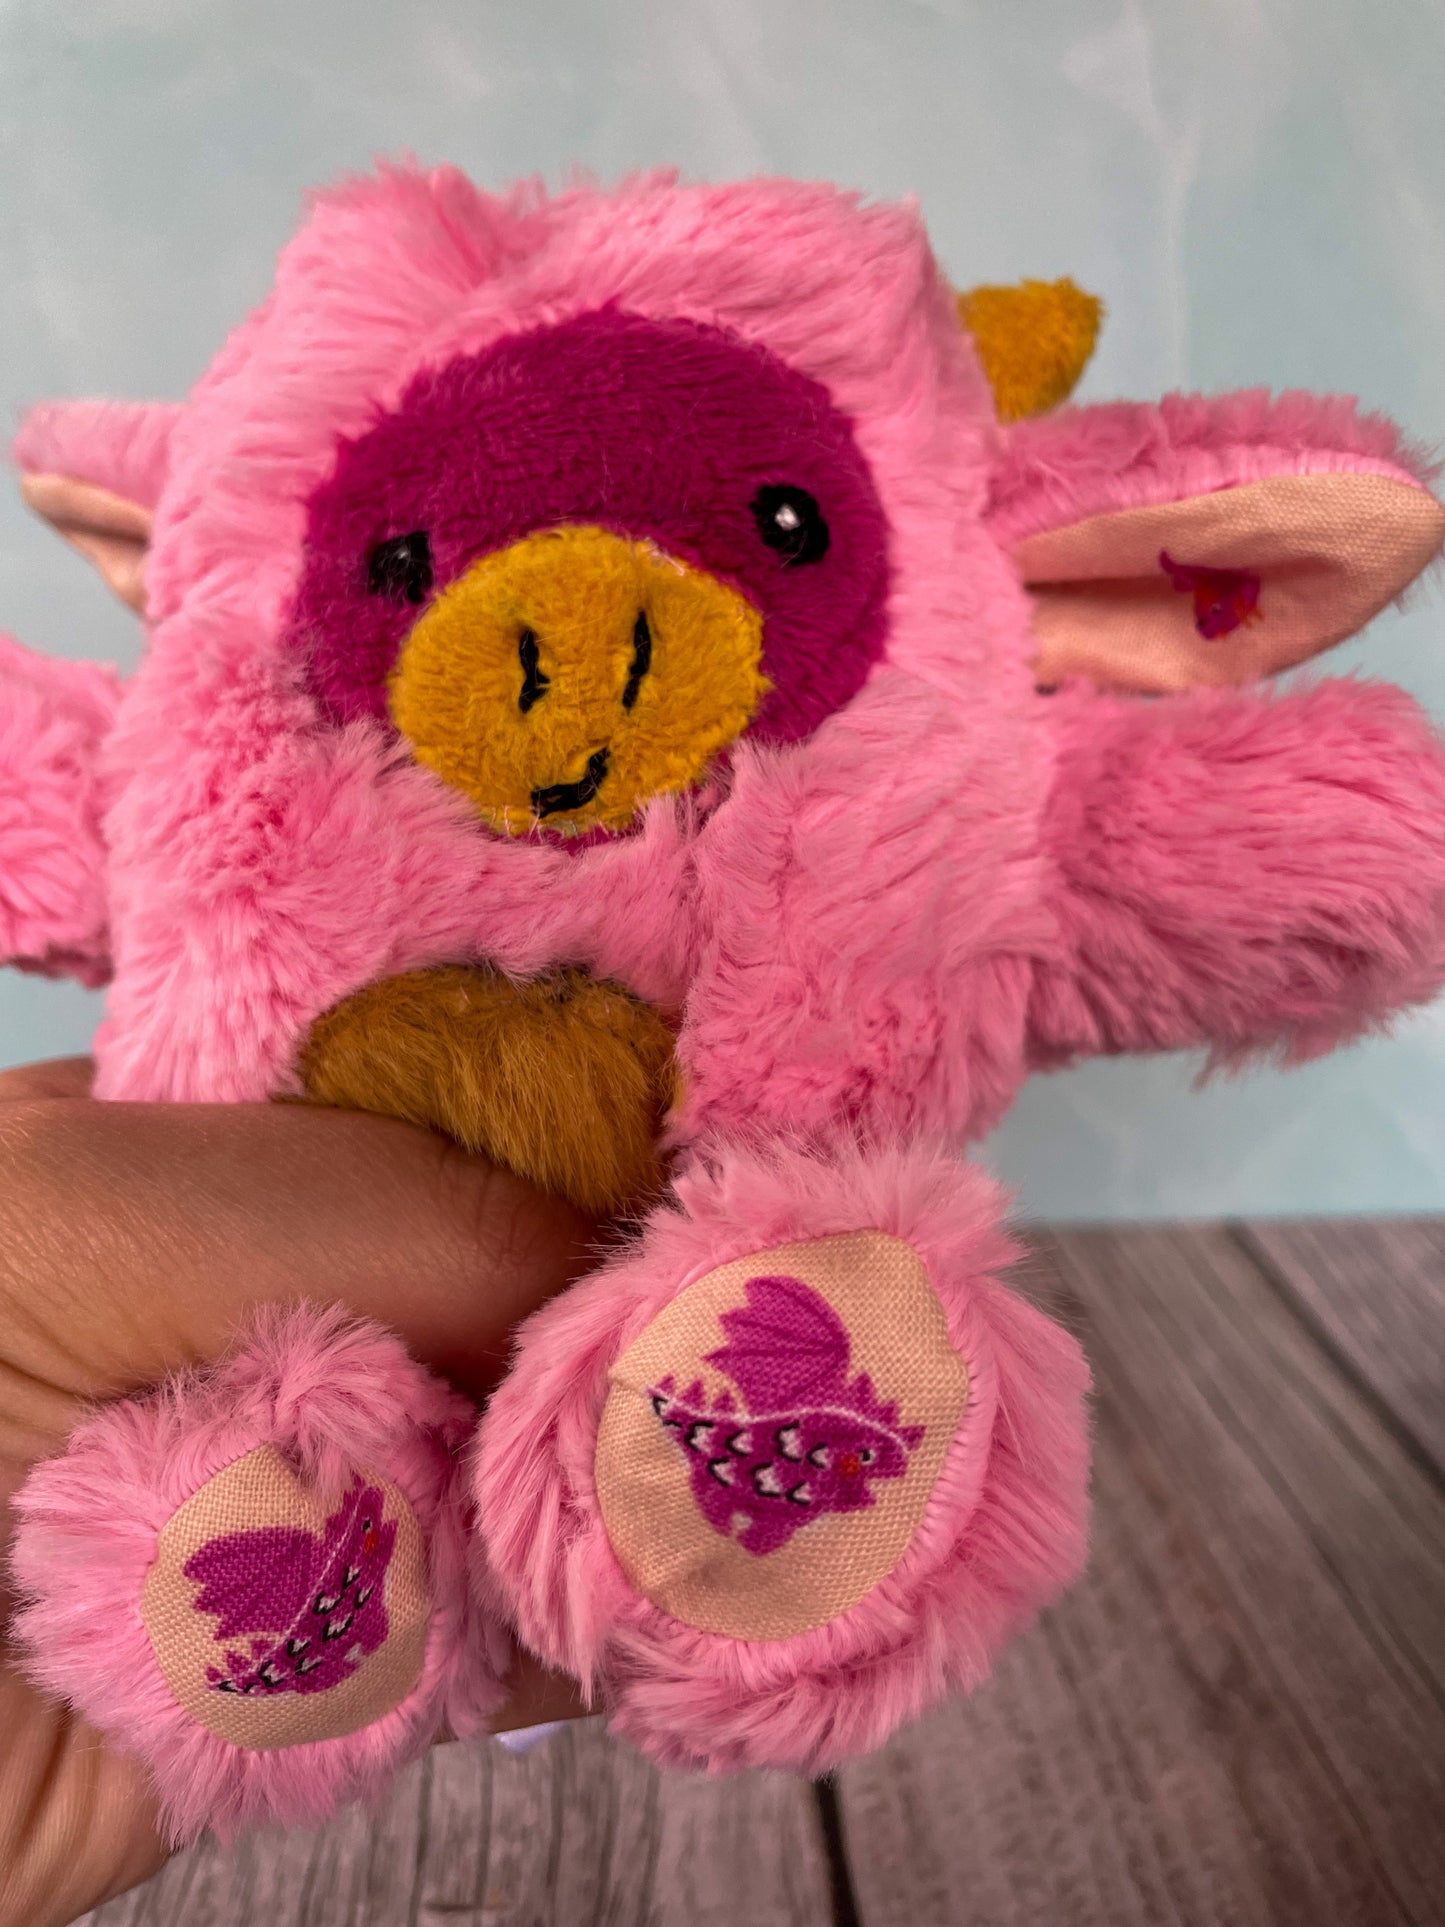 Dragon - Handmade Stuffed Animal Plush